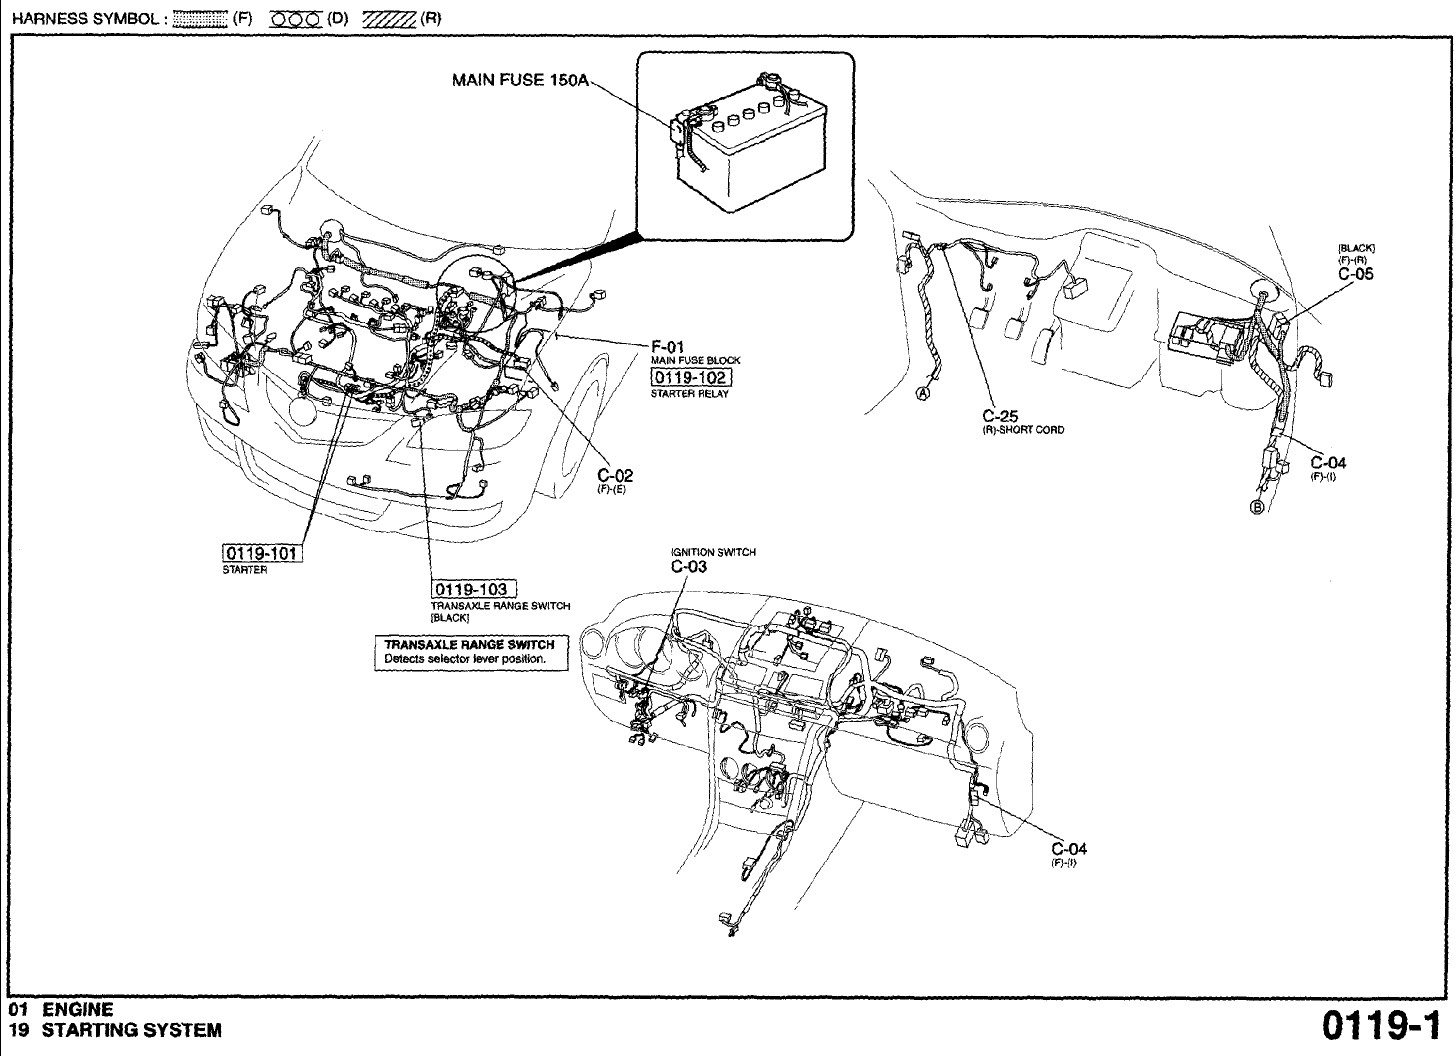 Mazda 3 Egine Diagram 2003 Mazda 3 Engine Diagram Of Mazda 3 Egine Diagram